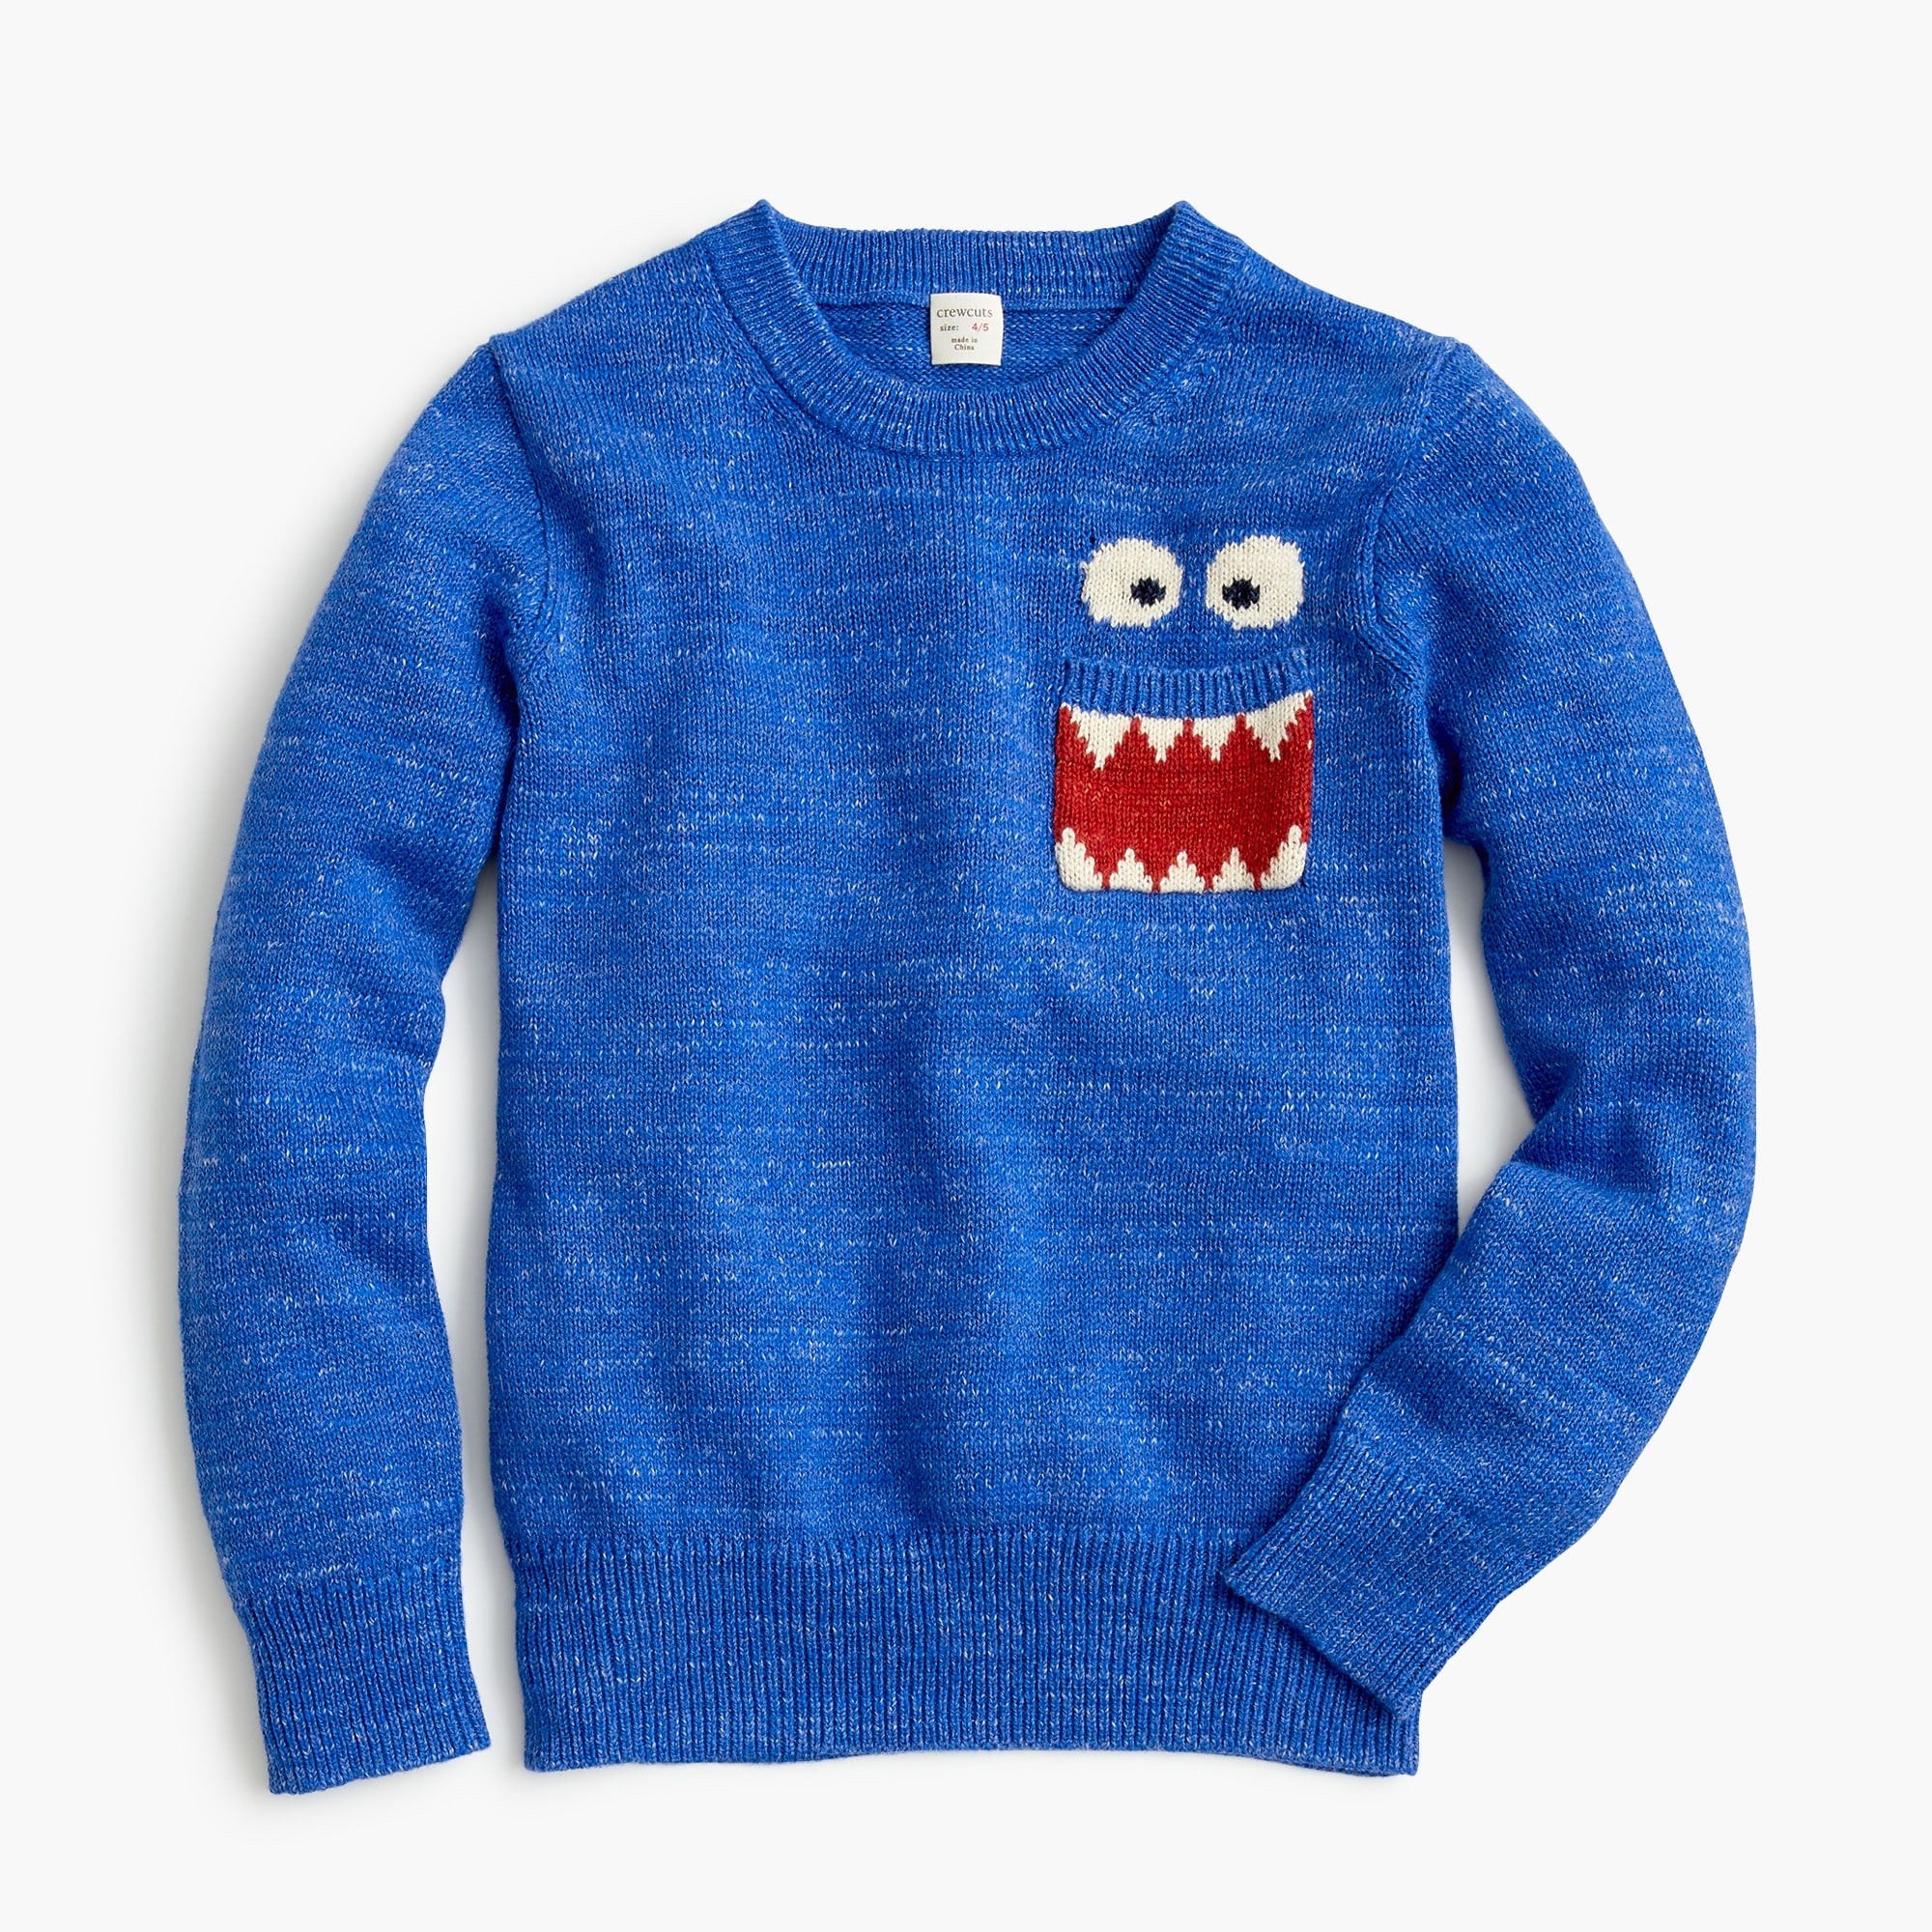 Boys' Sweaters : Crewnecks, Cardigans & More | J.Crew